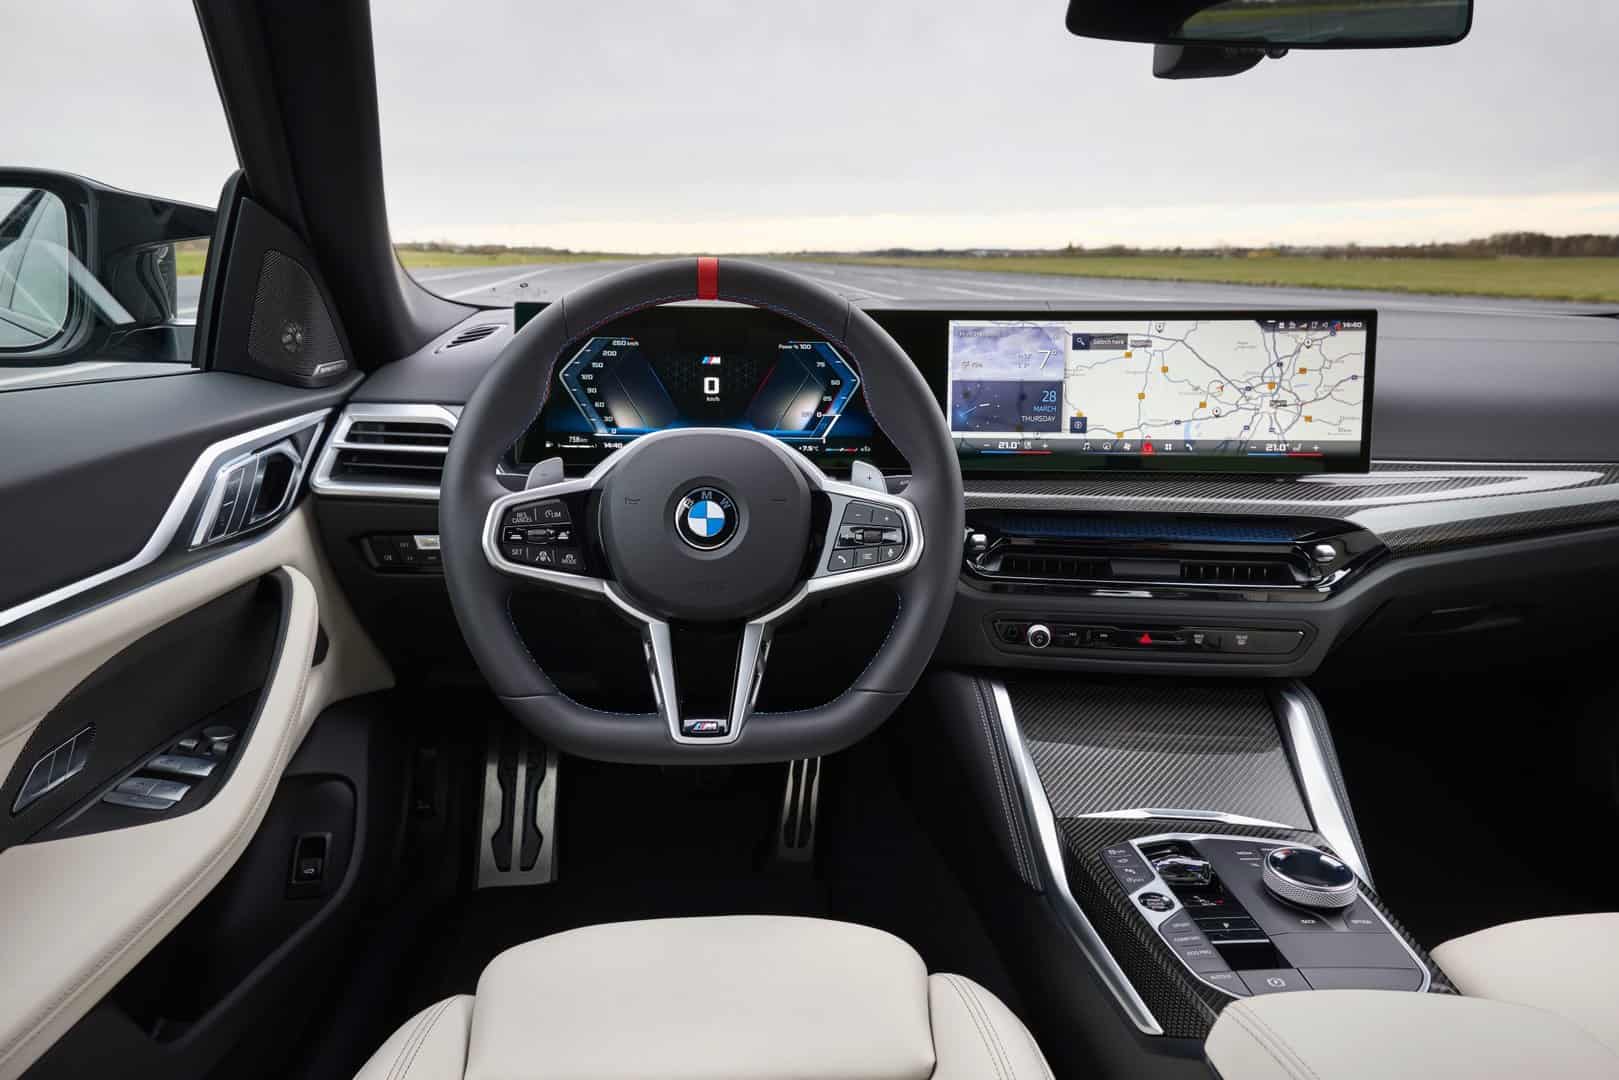 BMW M440i interior.